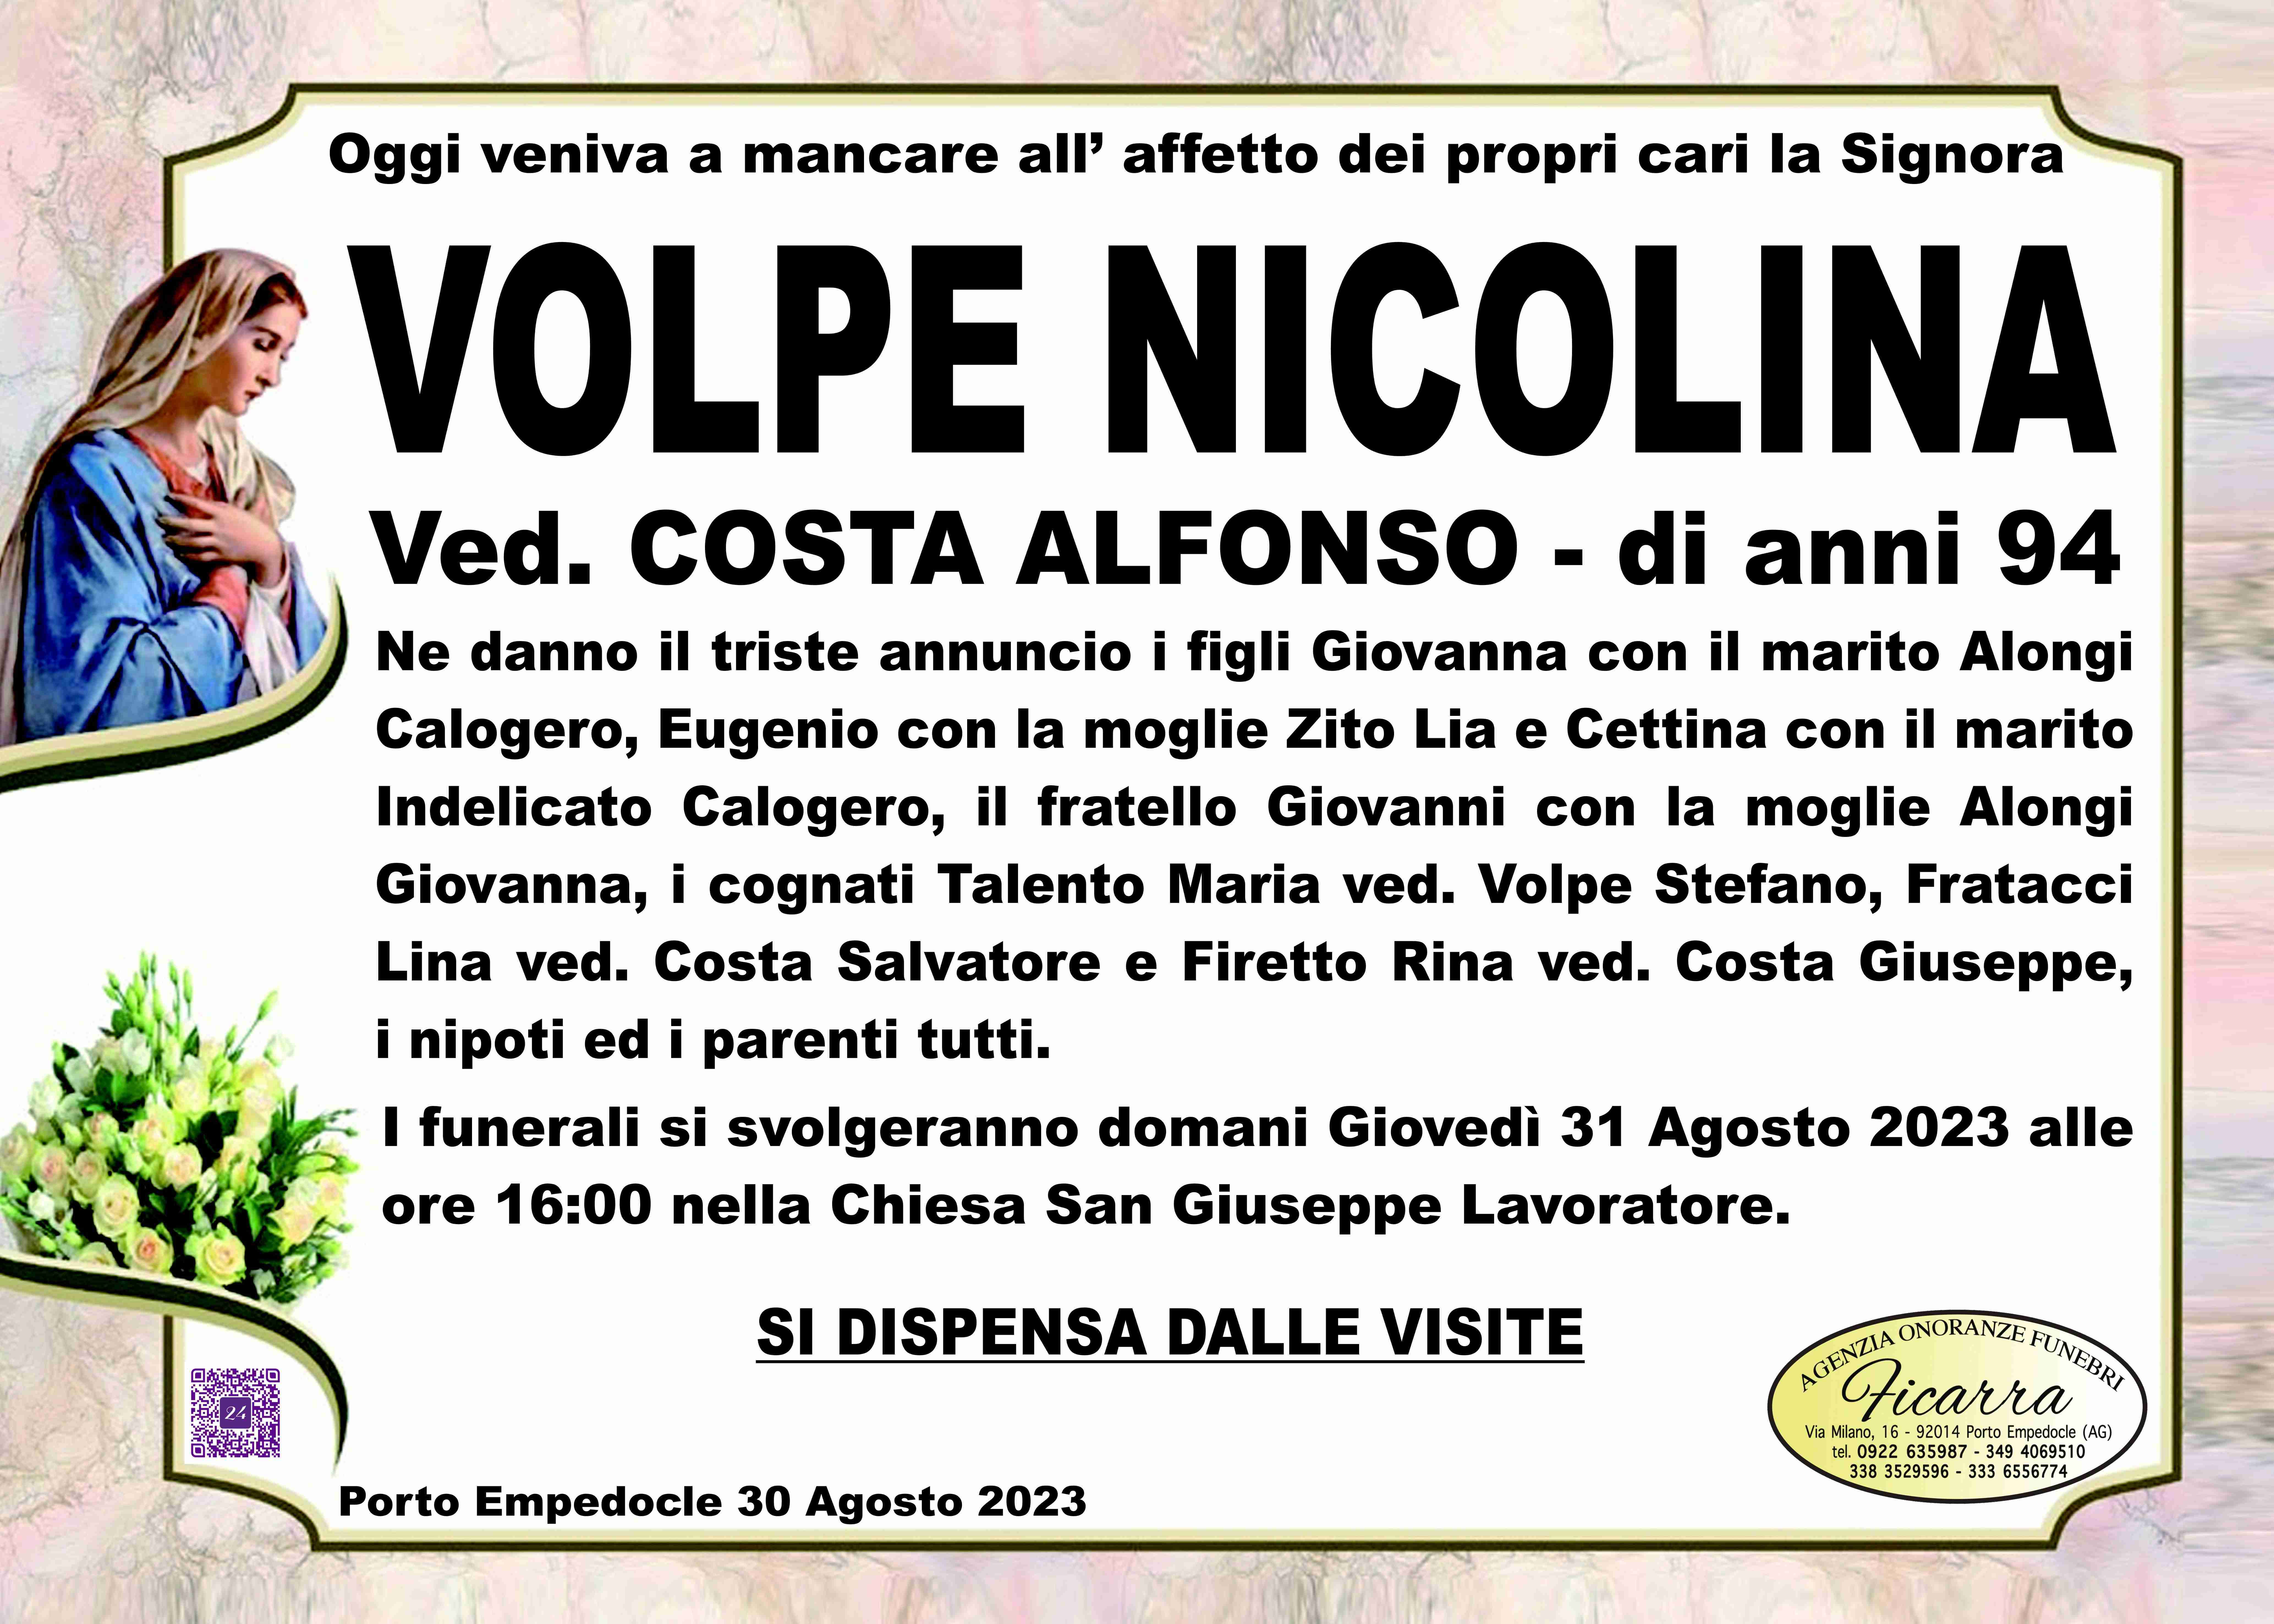 Nicolina Volpe